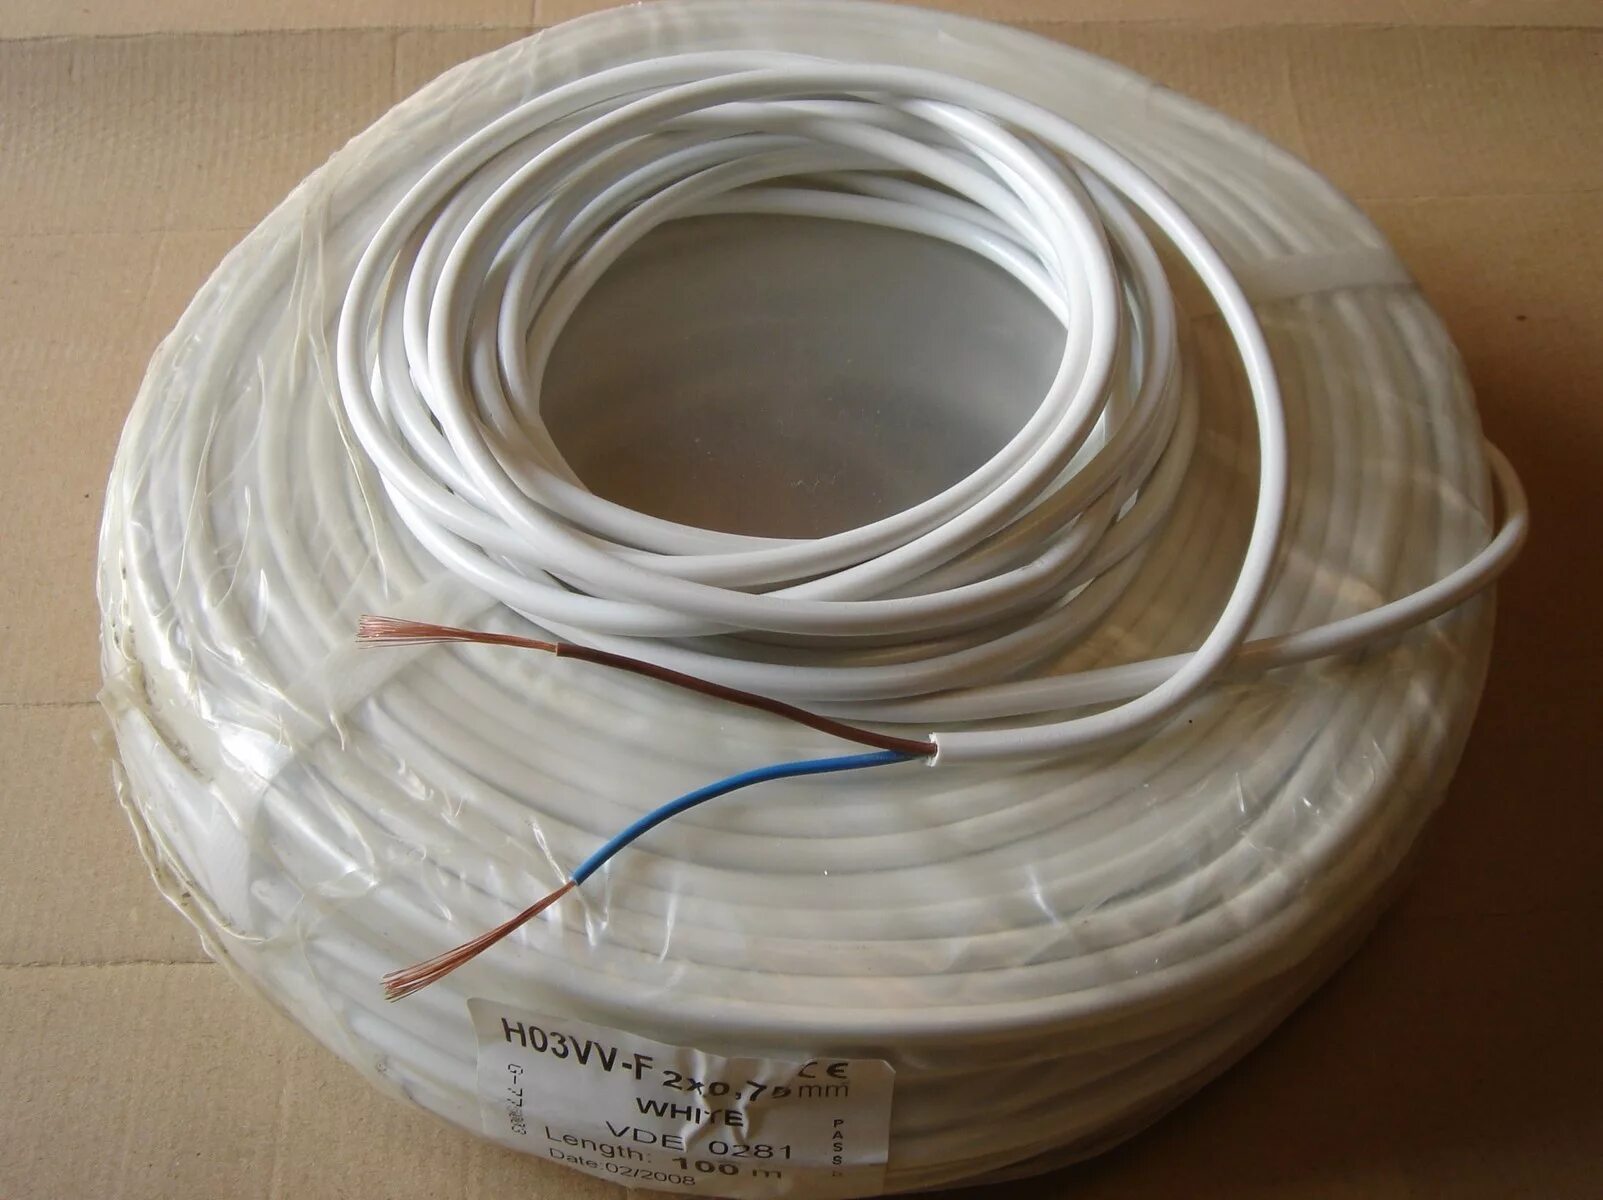 Купим кабель b. Cable кабель syti 2x0,75 Price. Провод 0 75 мм2. SV-71b провод поворотный. Медный провод 0.75.